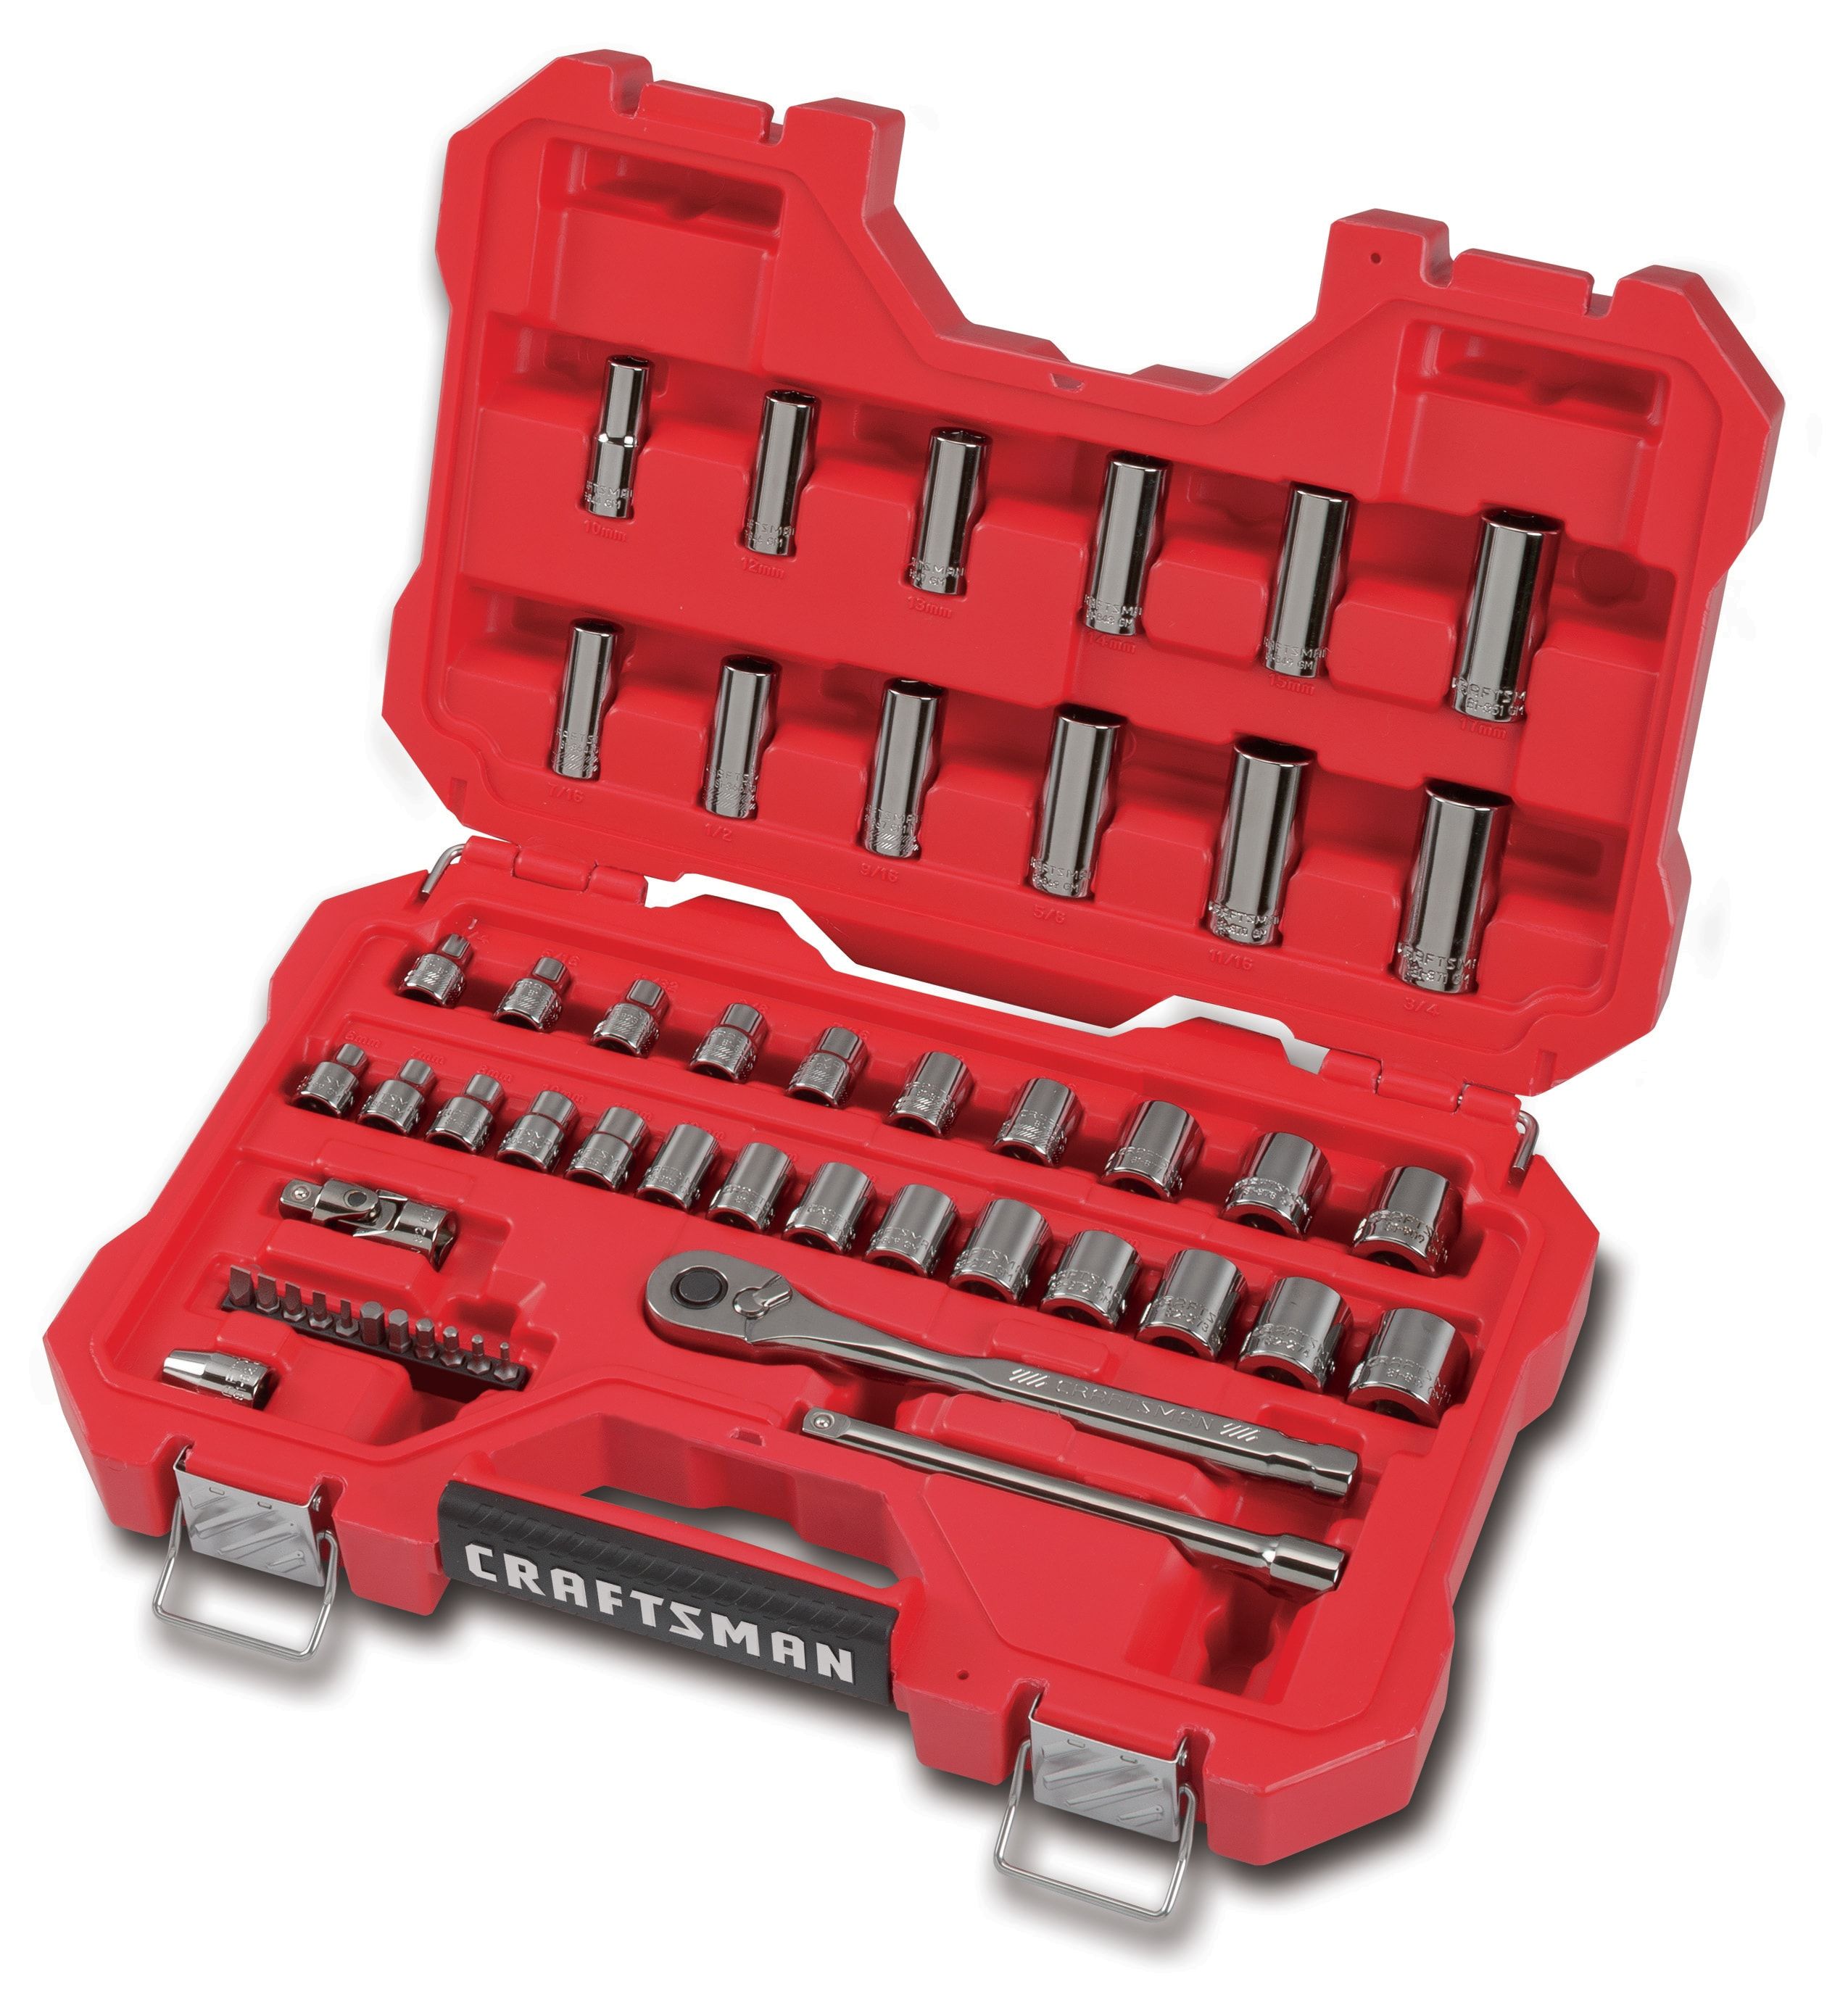 A standard 51-piece mechanic's tool kit